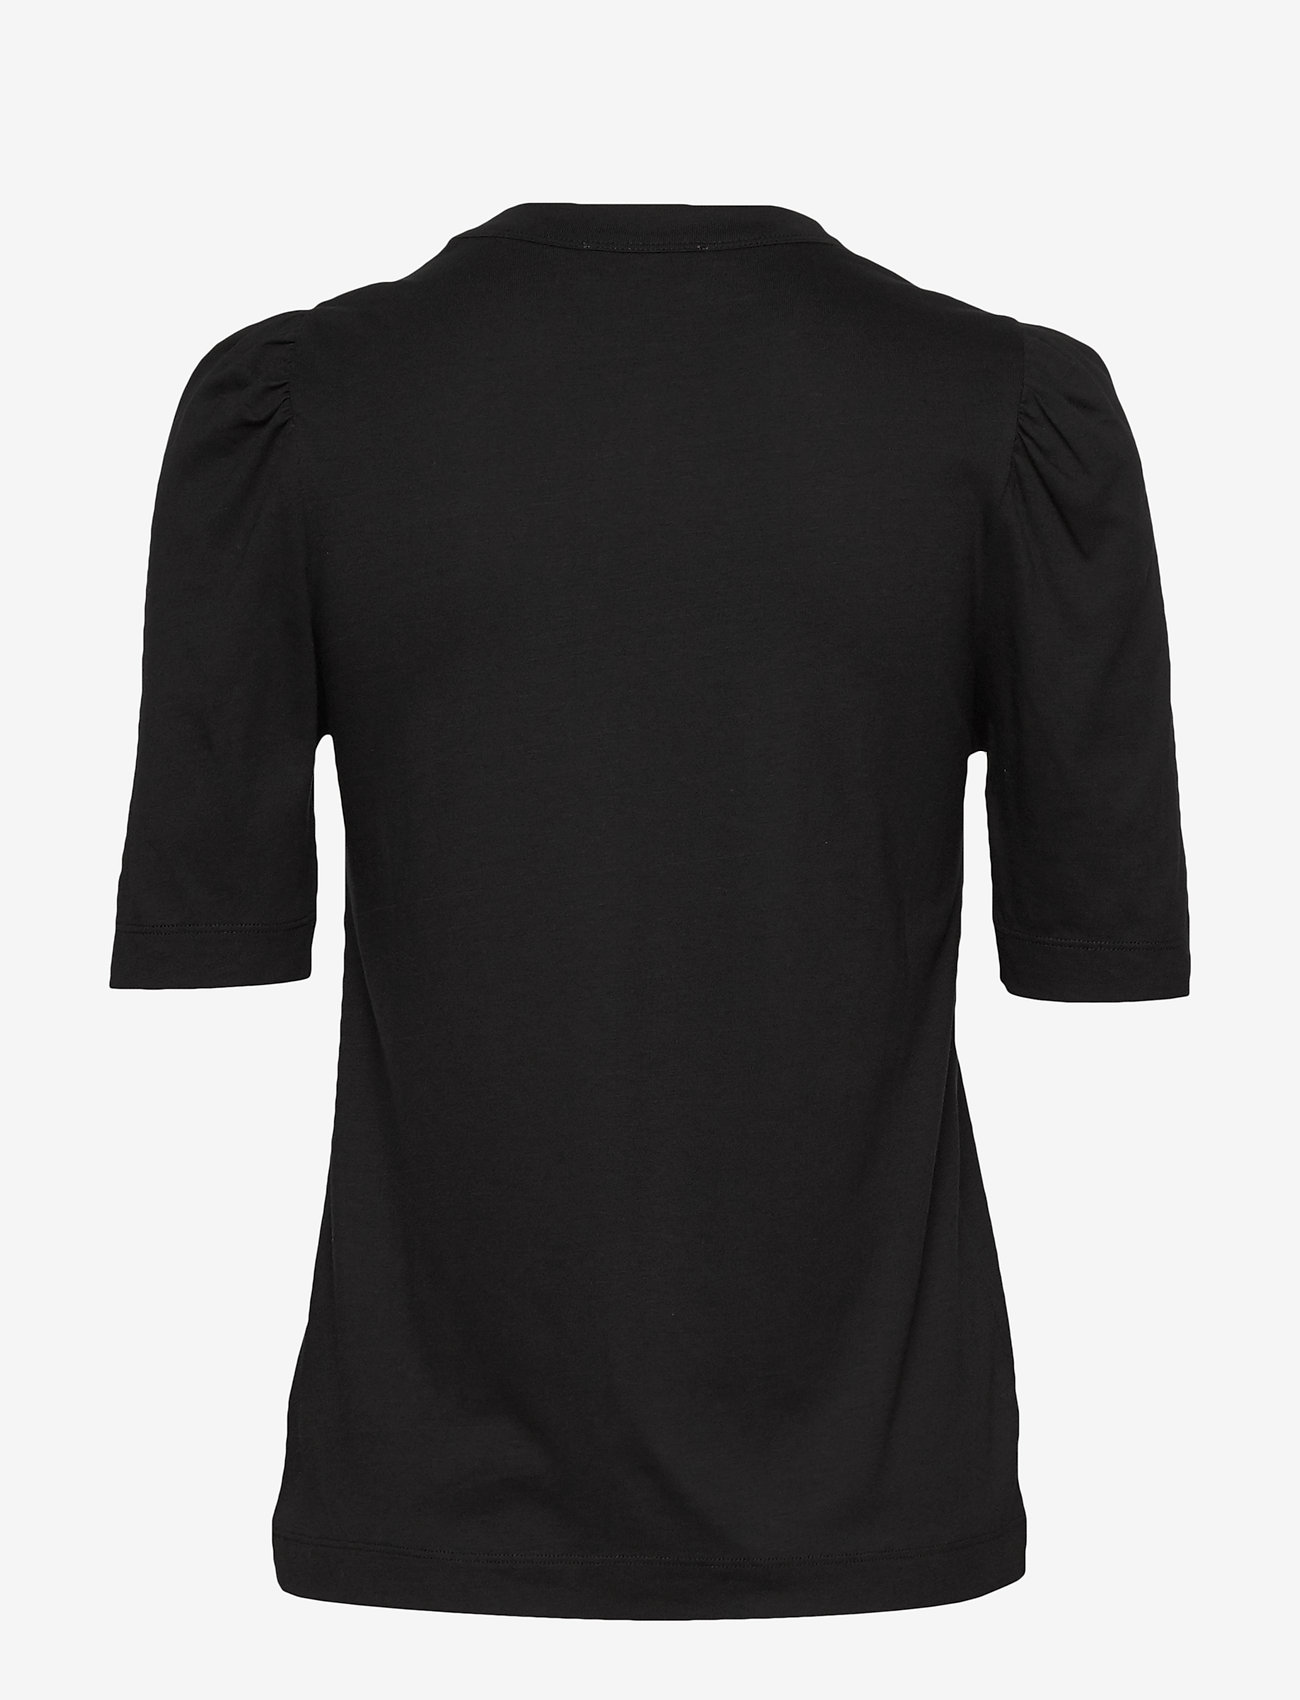 RODEBJER - Rodebjer Dory - t-shirts - black - 1